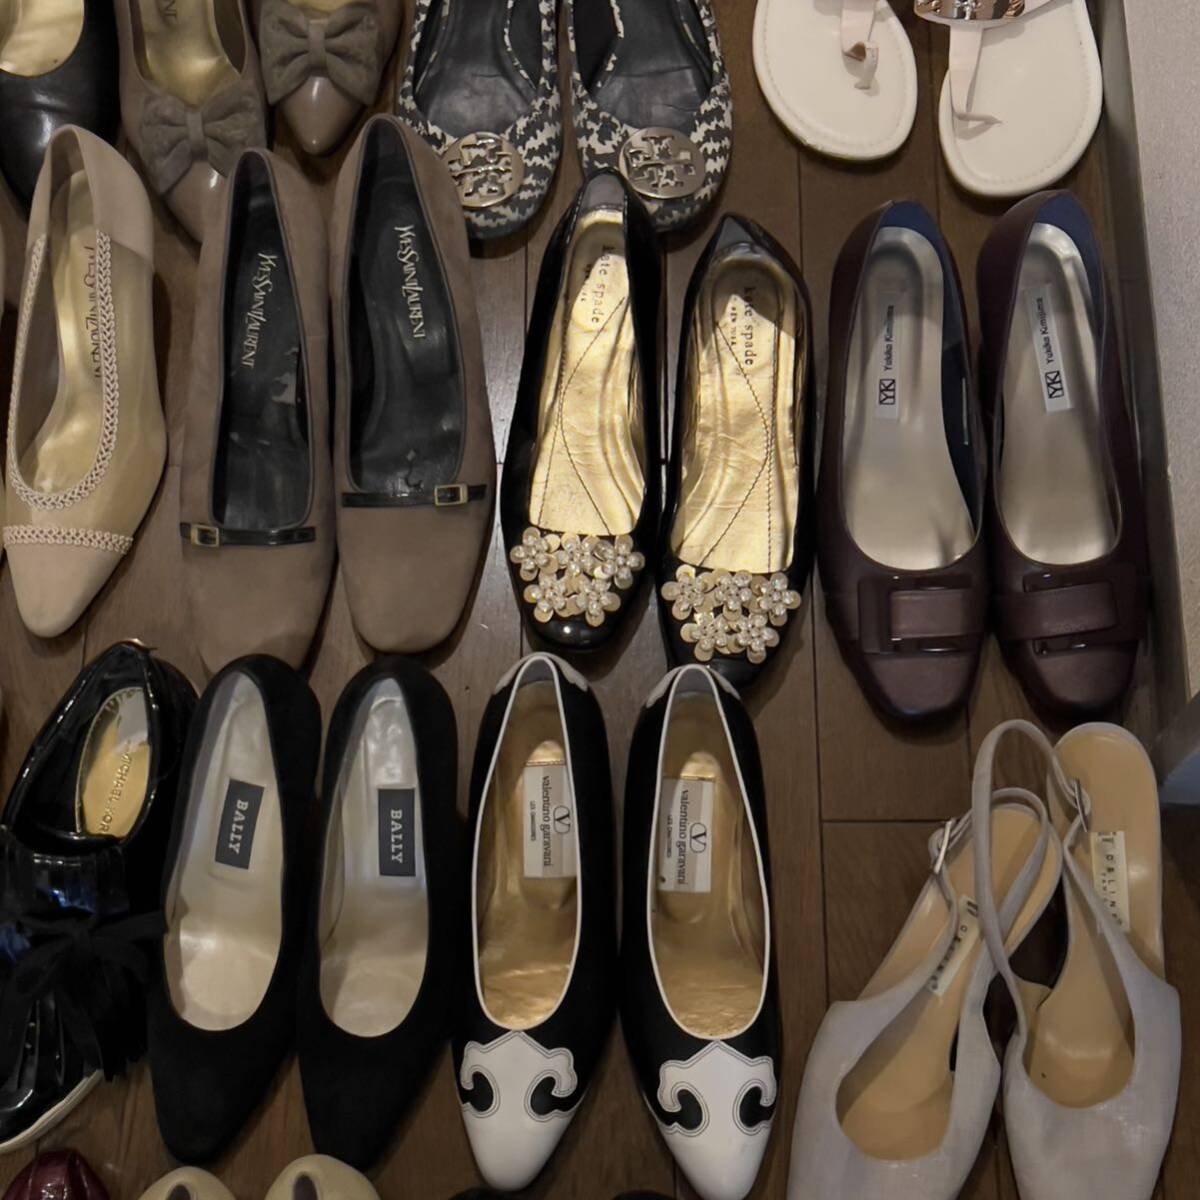 1 start set sale 30 pairs set brand shoes pumps sandals Ferragamo TORY BURCH MICHAEL KORS Chloe MIU MIU CELINE various Junk 